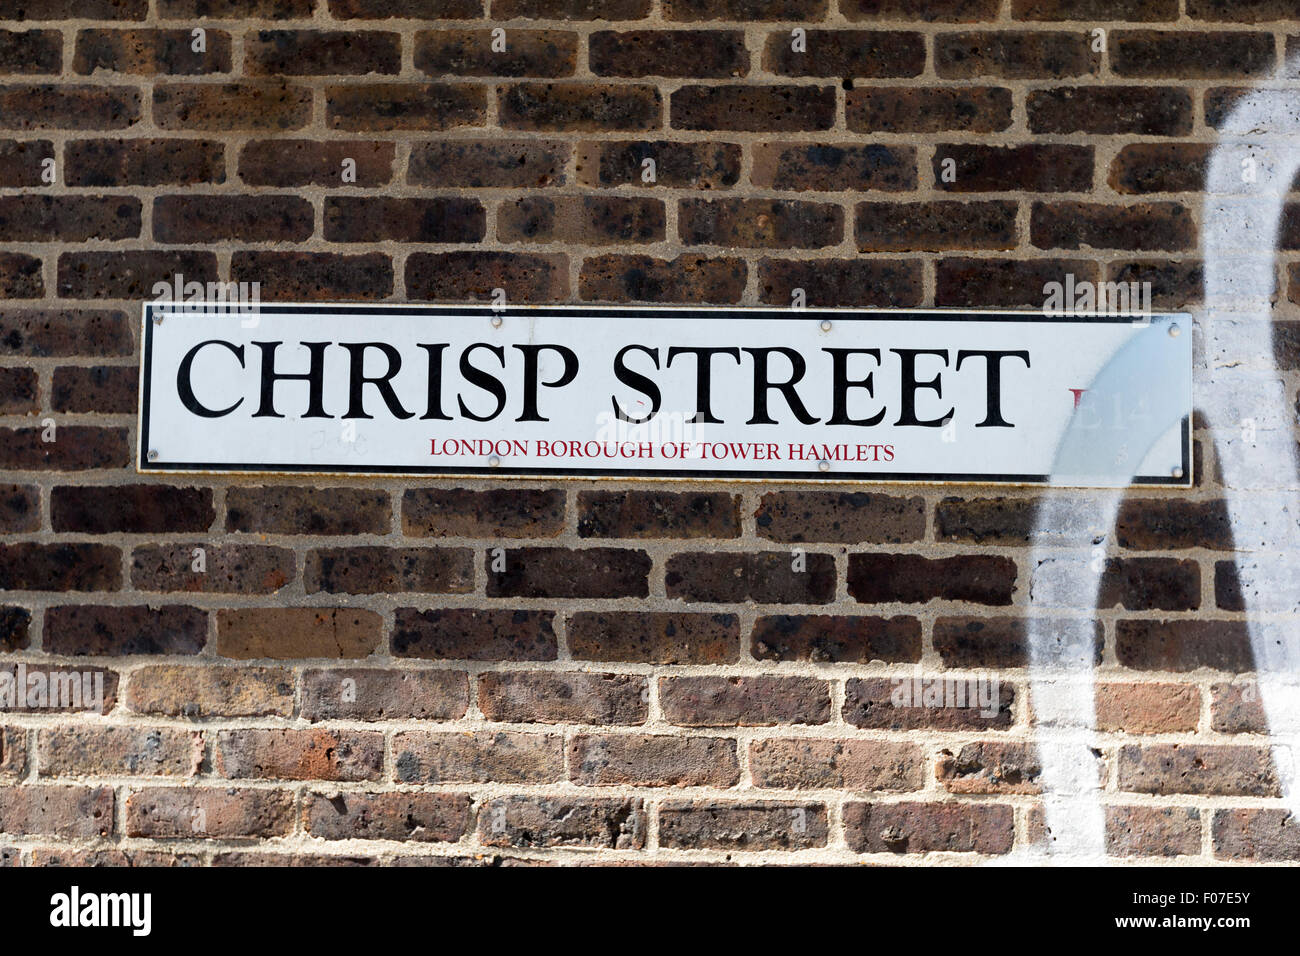 Chrisp Street, road sign, Tower Hamlets, London, England, UK. Stock Photo